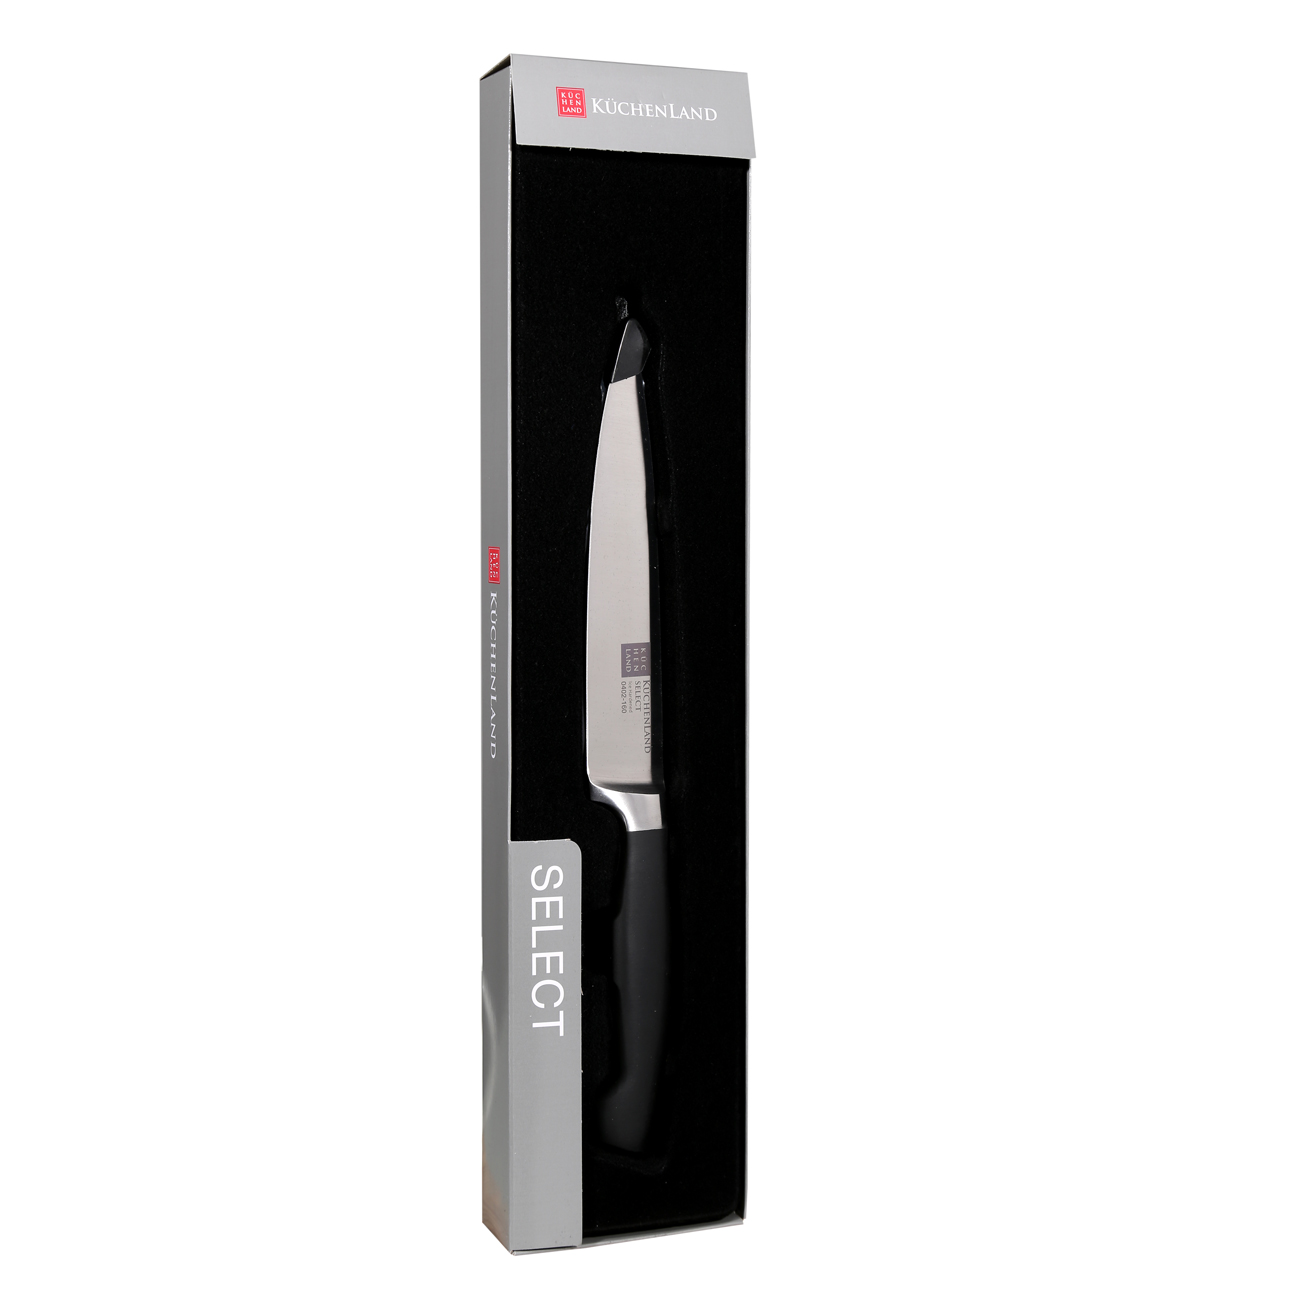 Carving knife, 16 cm, Steel/Plastic, Choose изображение № 3